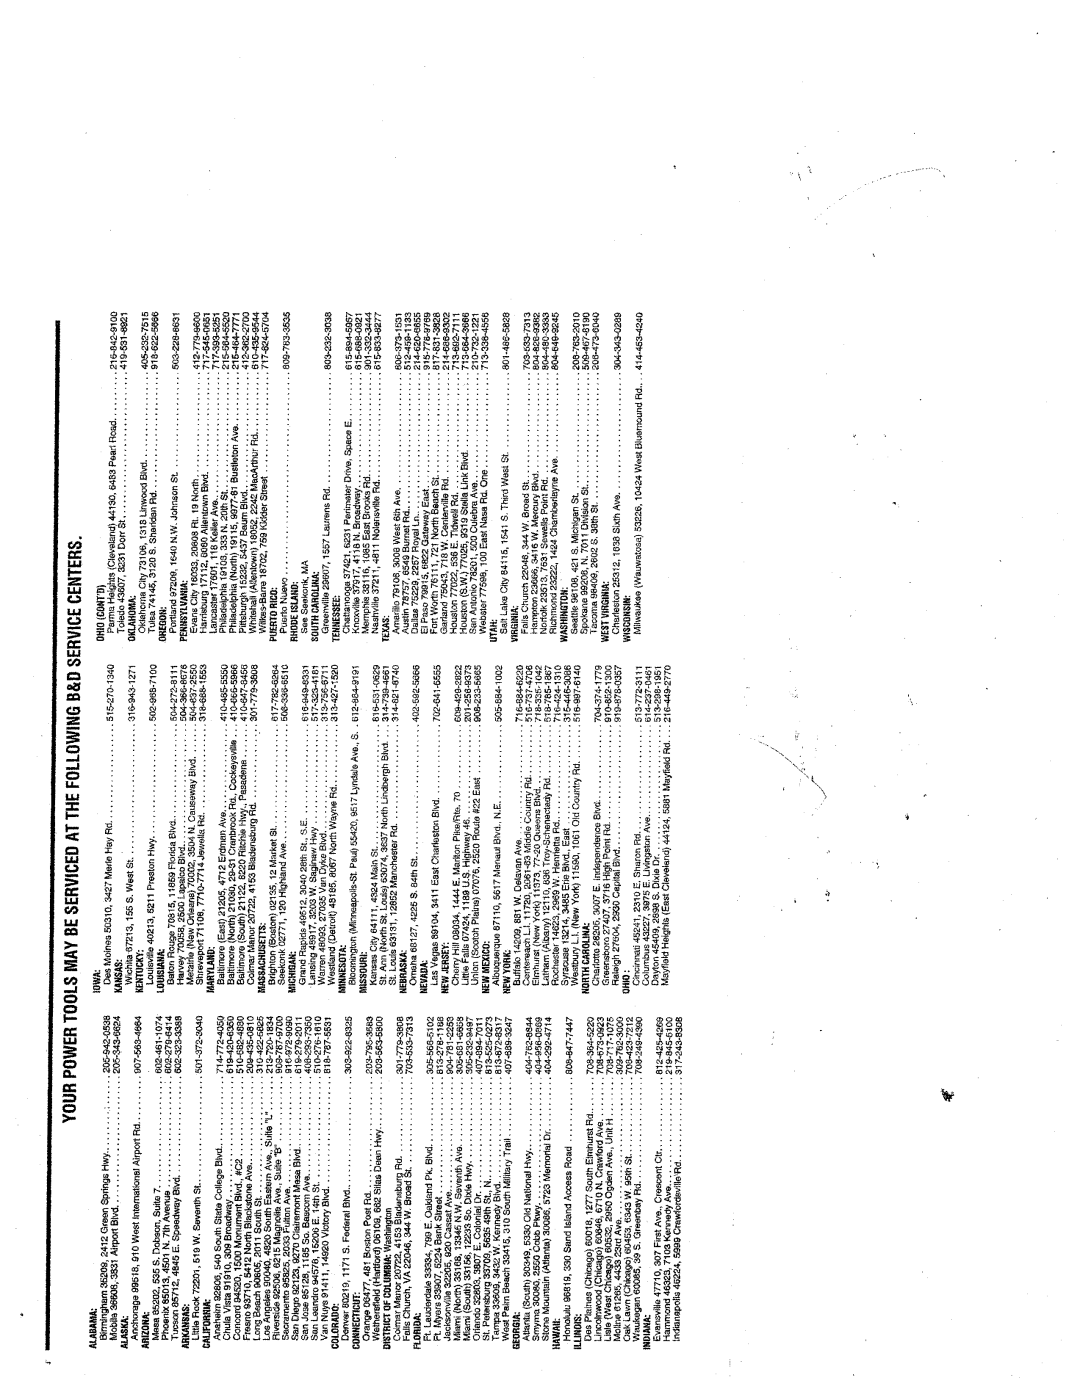 Black & Decker 2600, 1311G, 1046, 1180G, 1166, 1312G, 1042 manual 